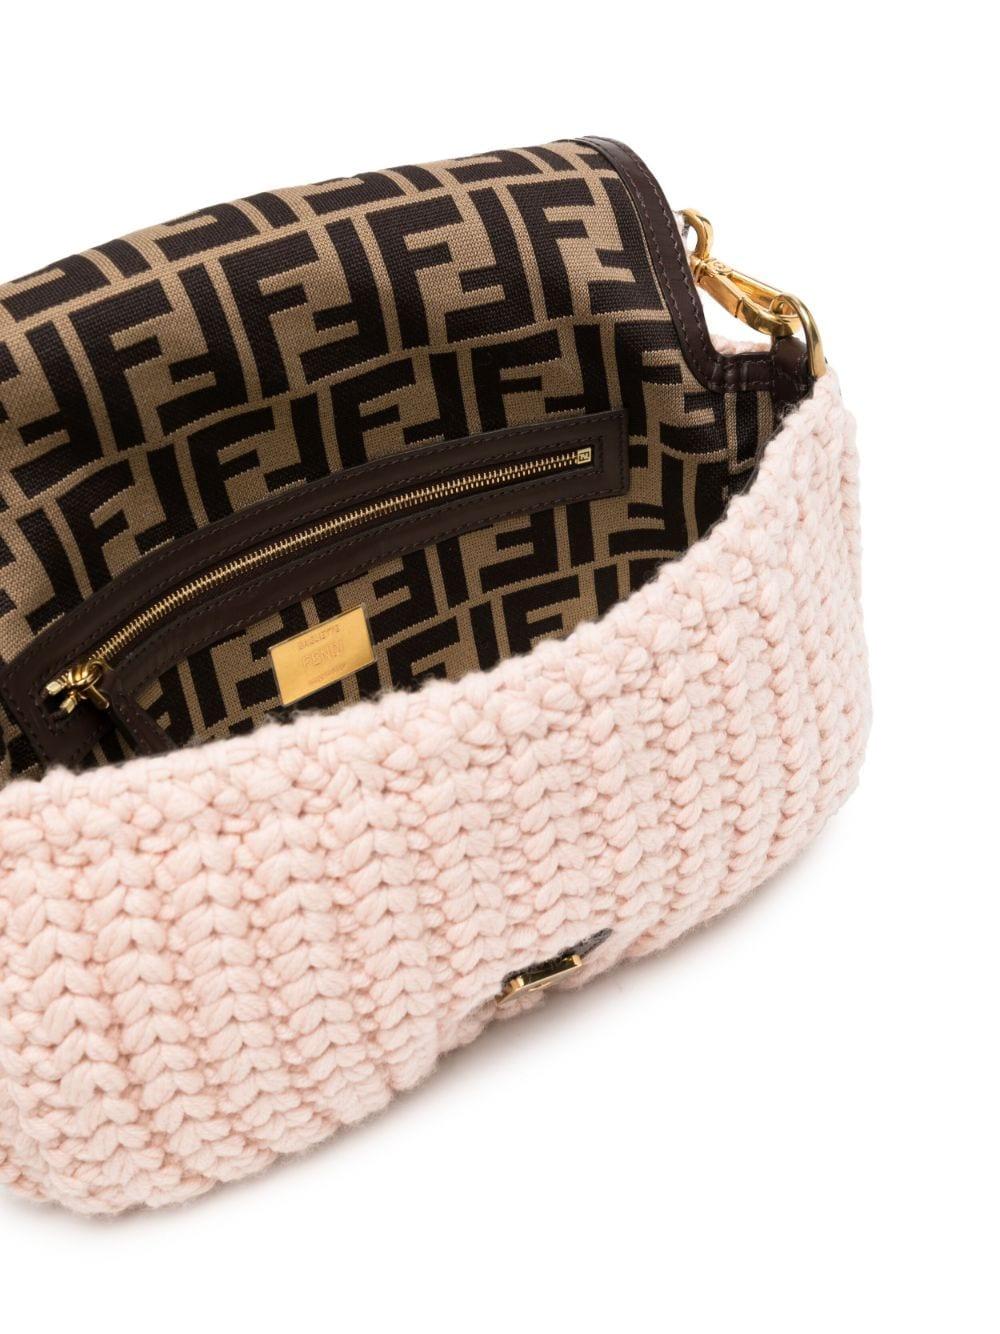 Fendi Knit Baguette Bag  1